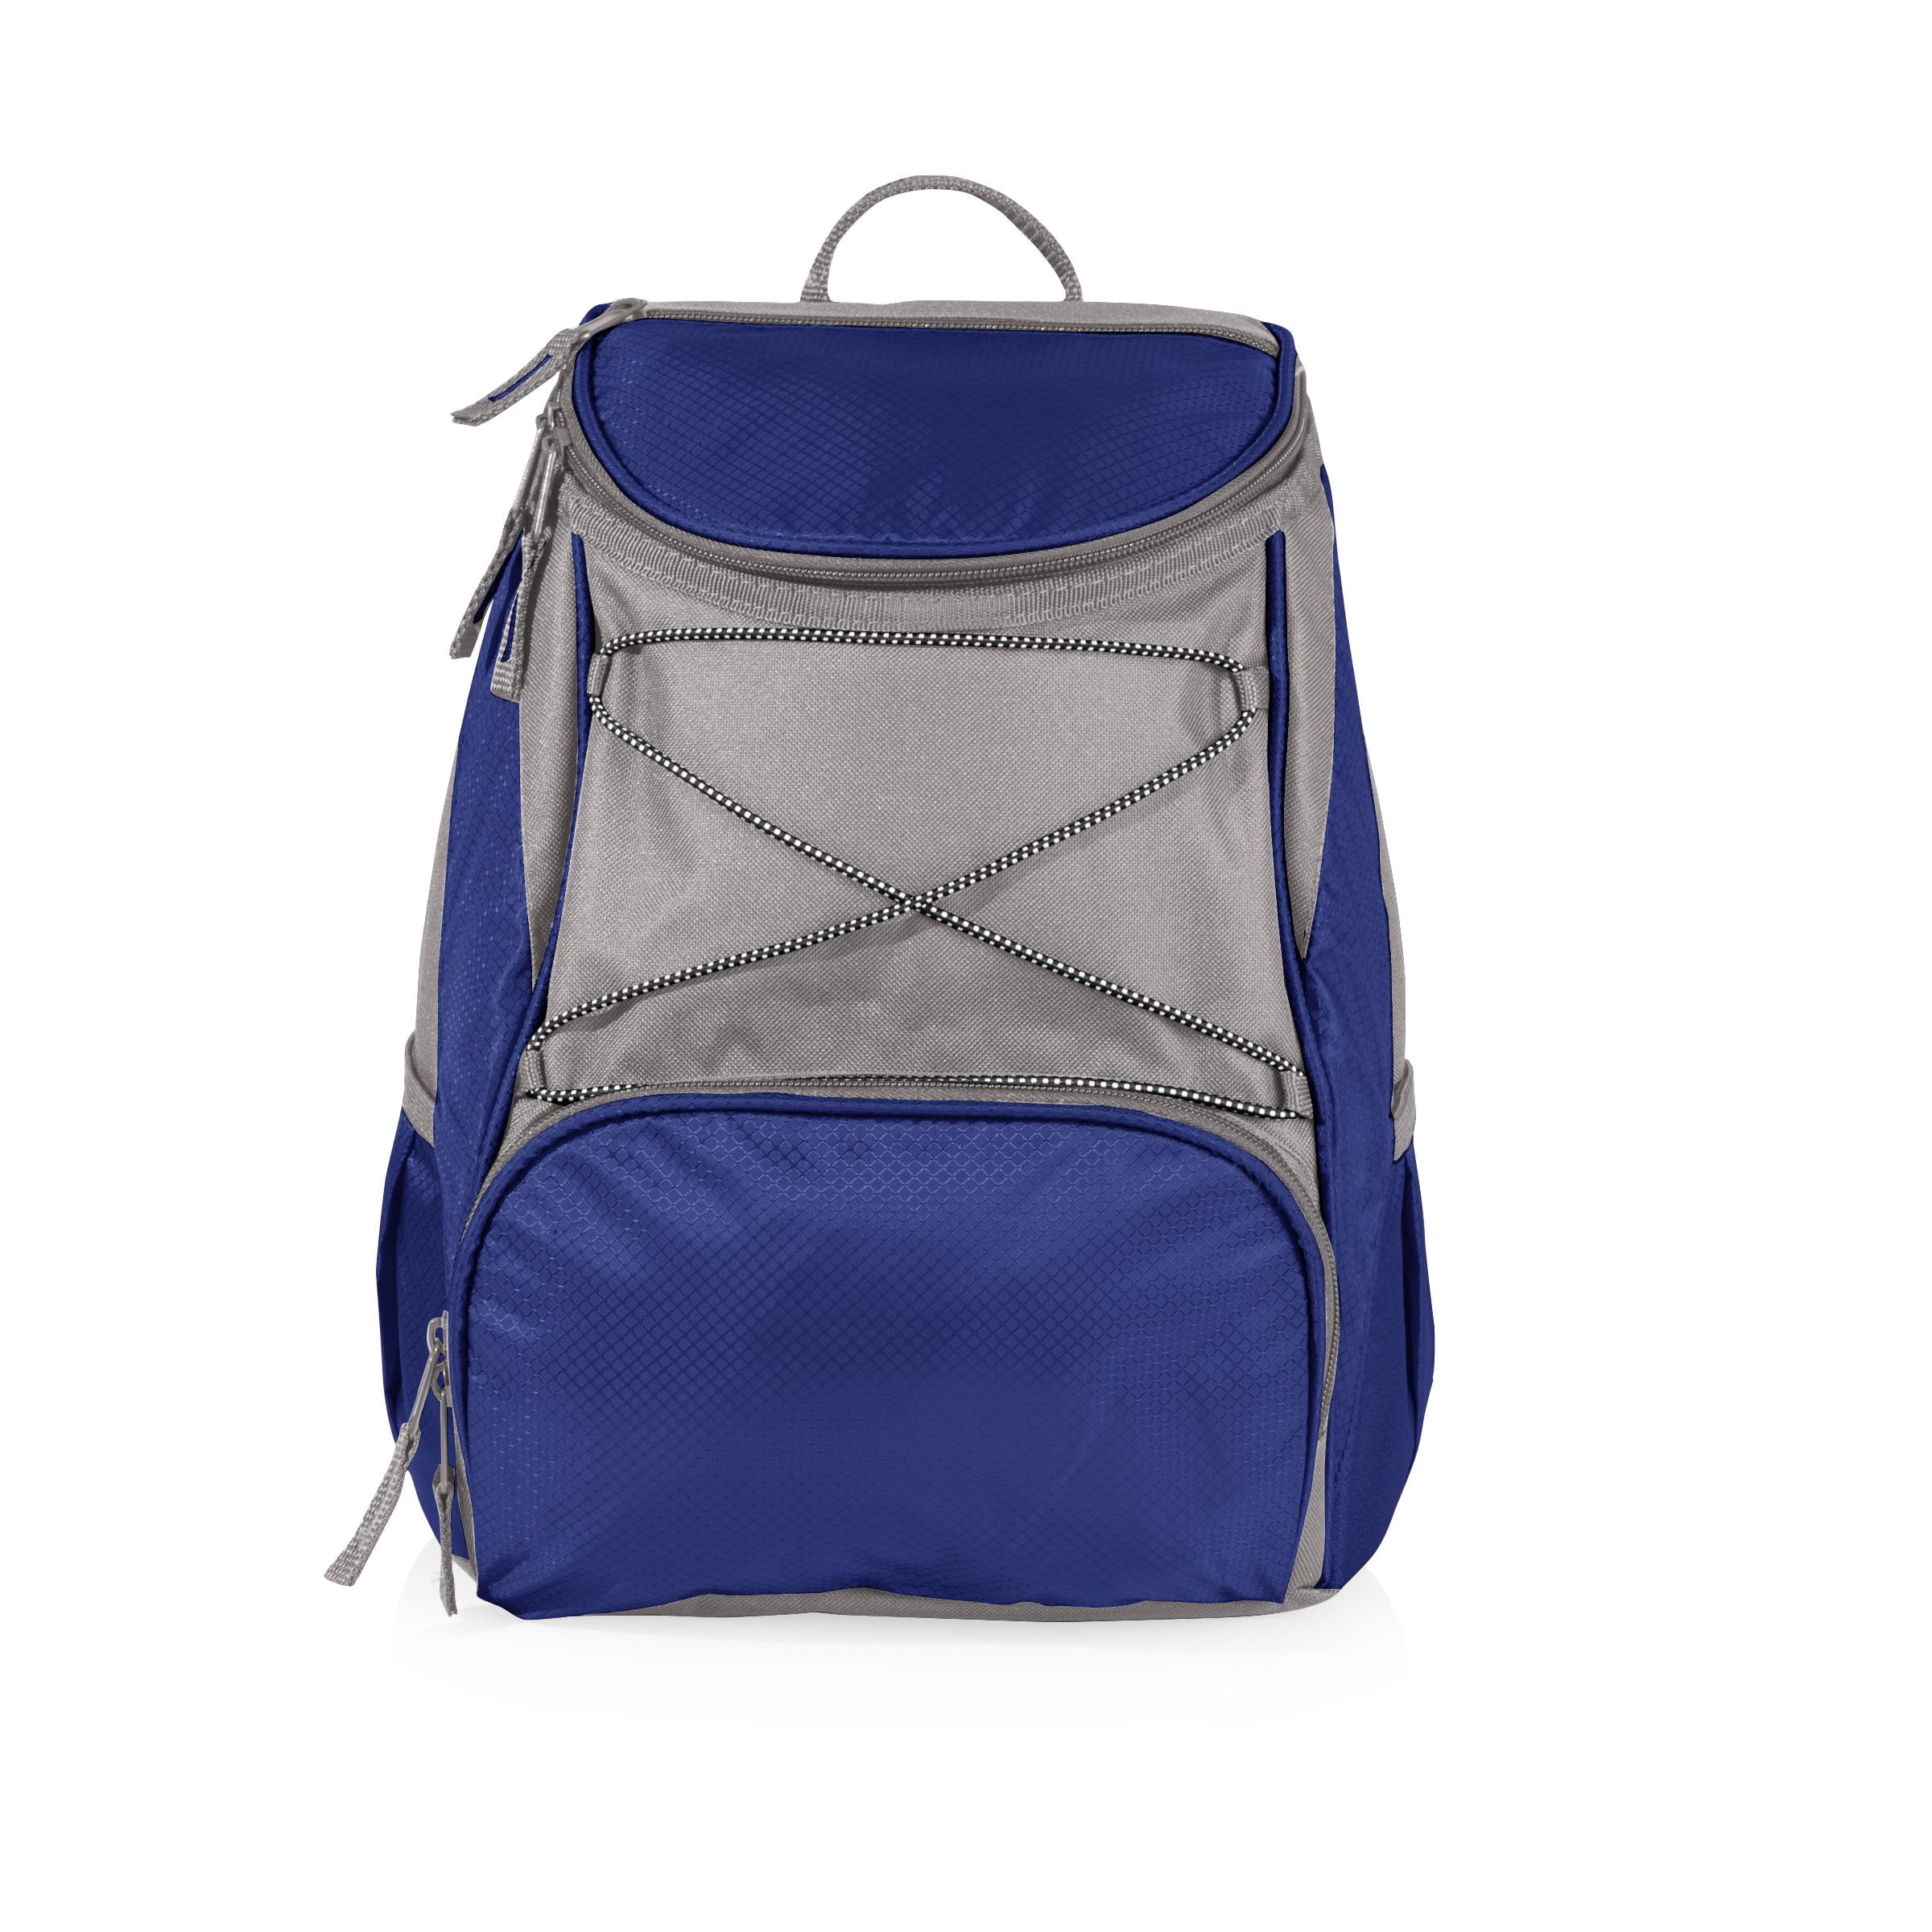 backpack cooler walmart